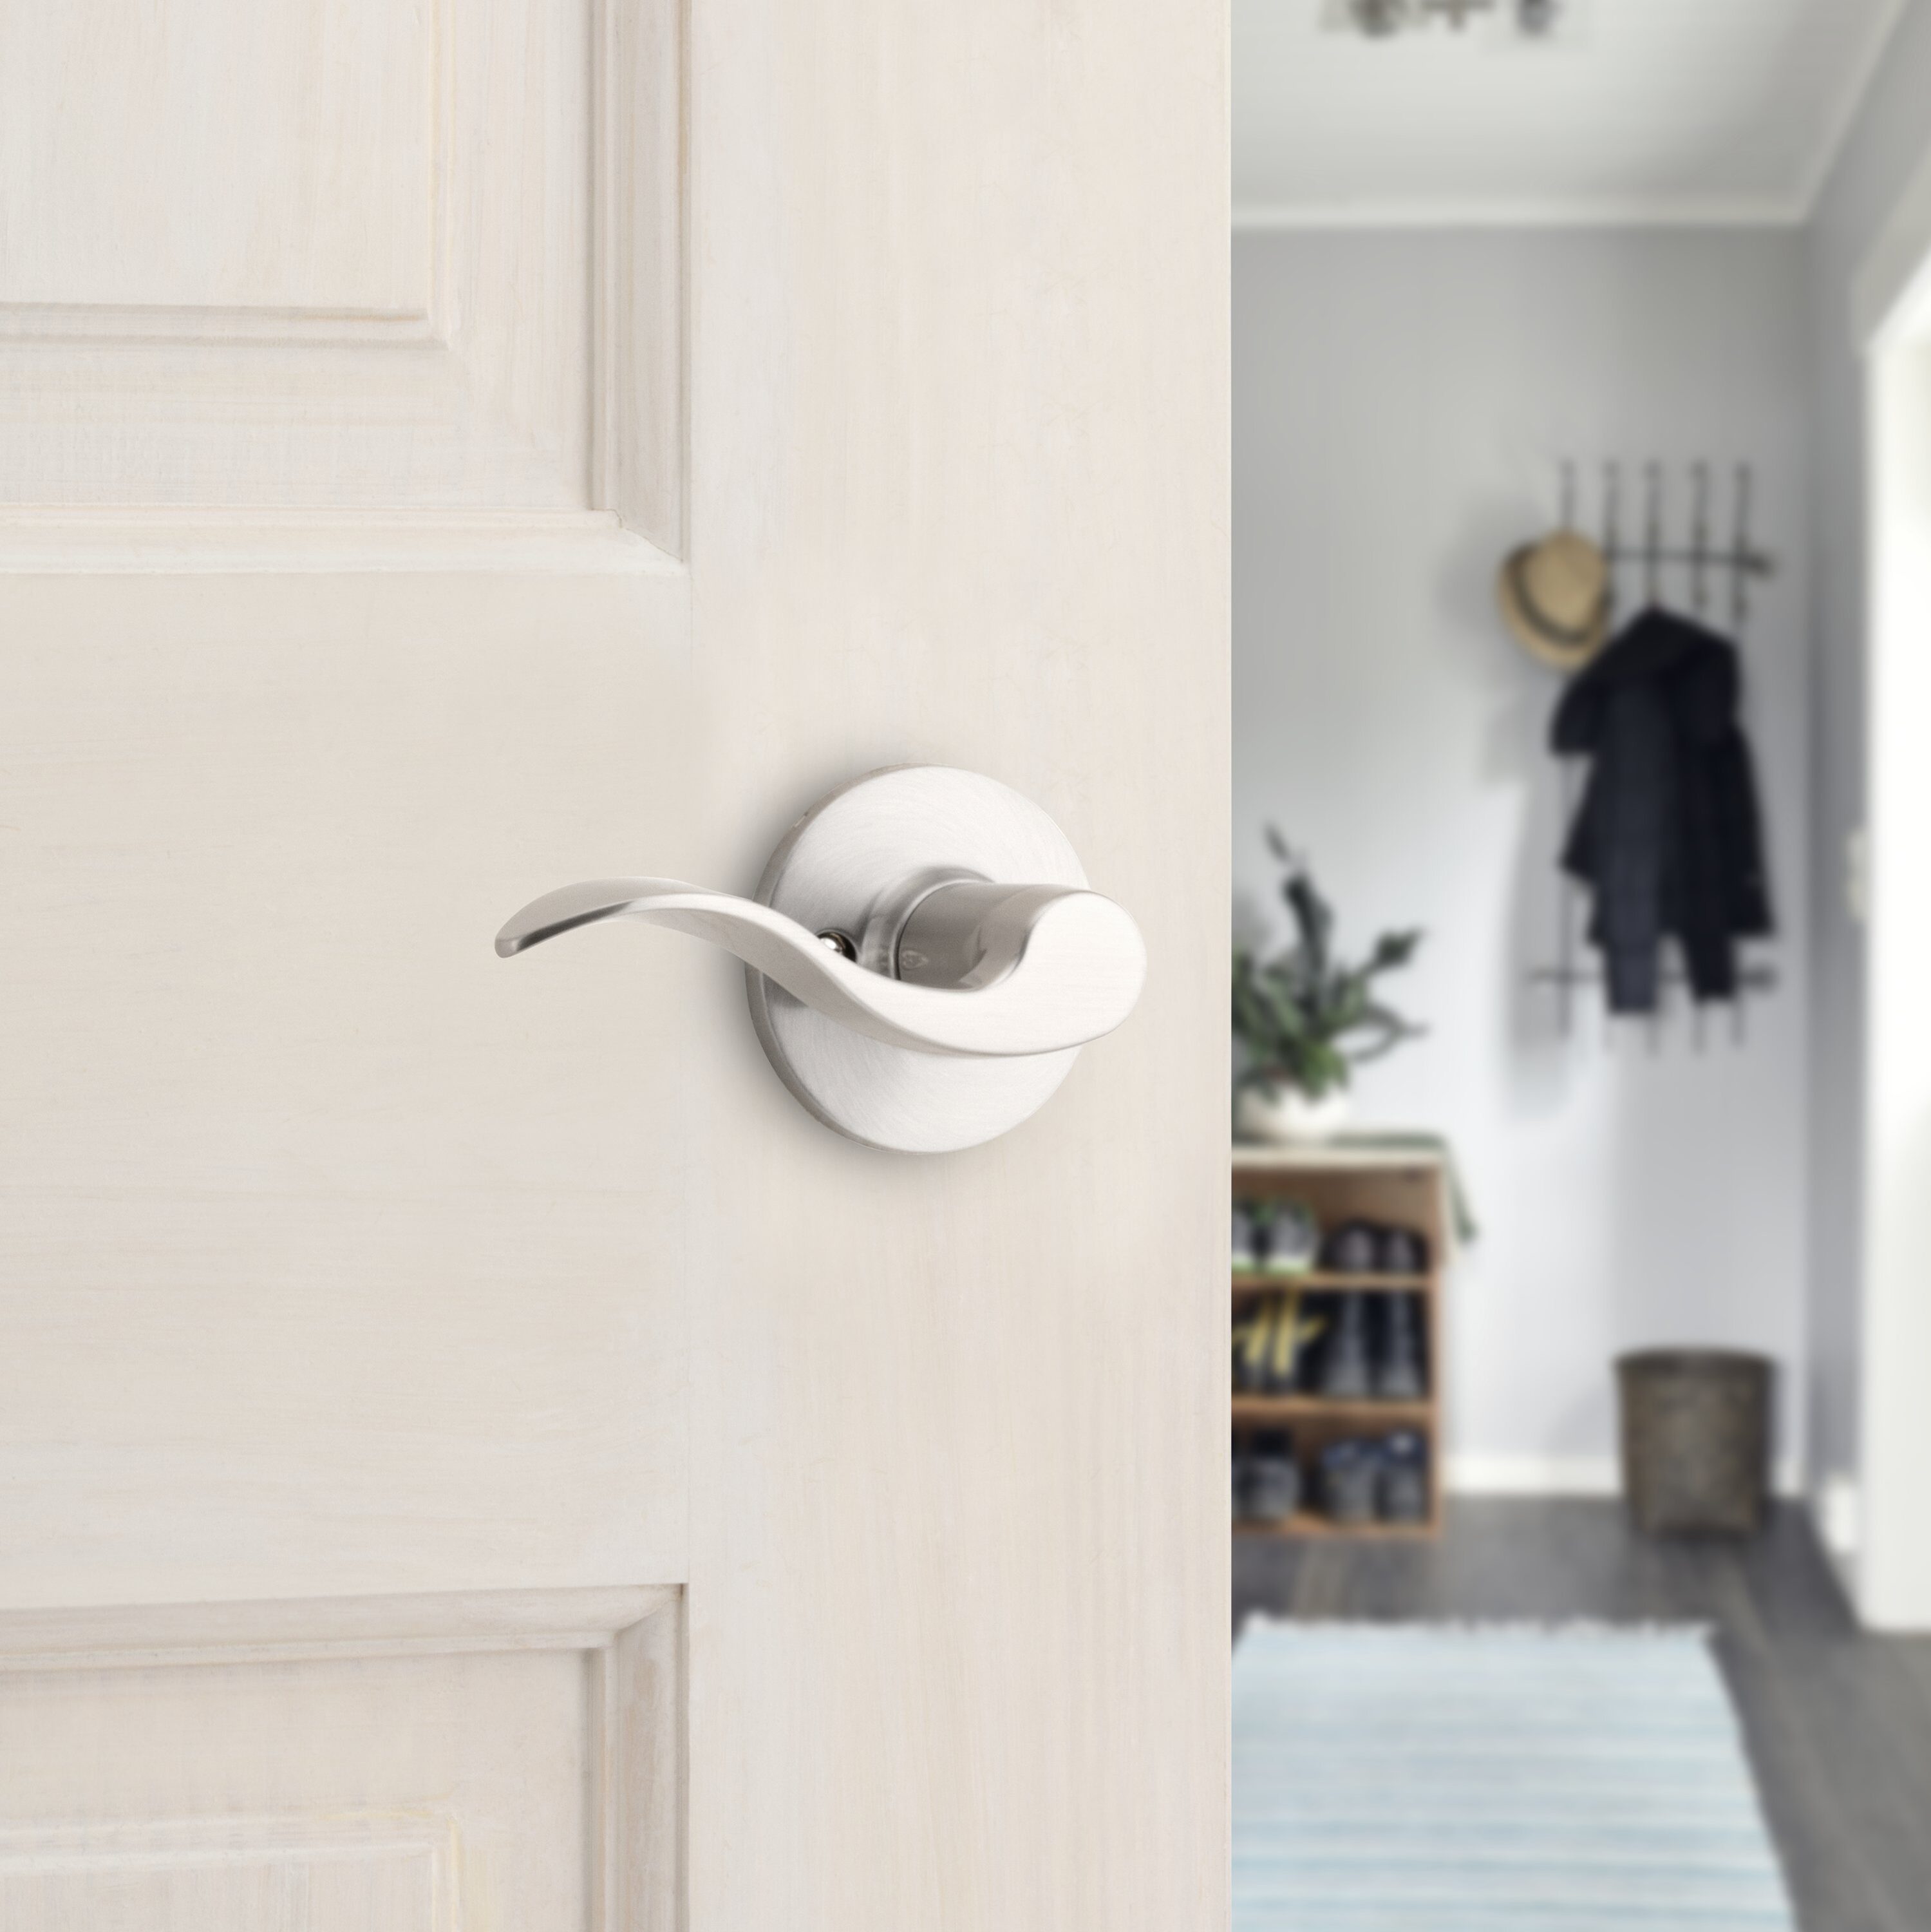 Rok Hardware Satin Nickel Privacy Home Bedroom Closet Door Handle Lever  Lock - Right